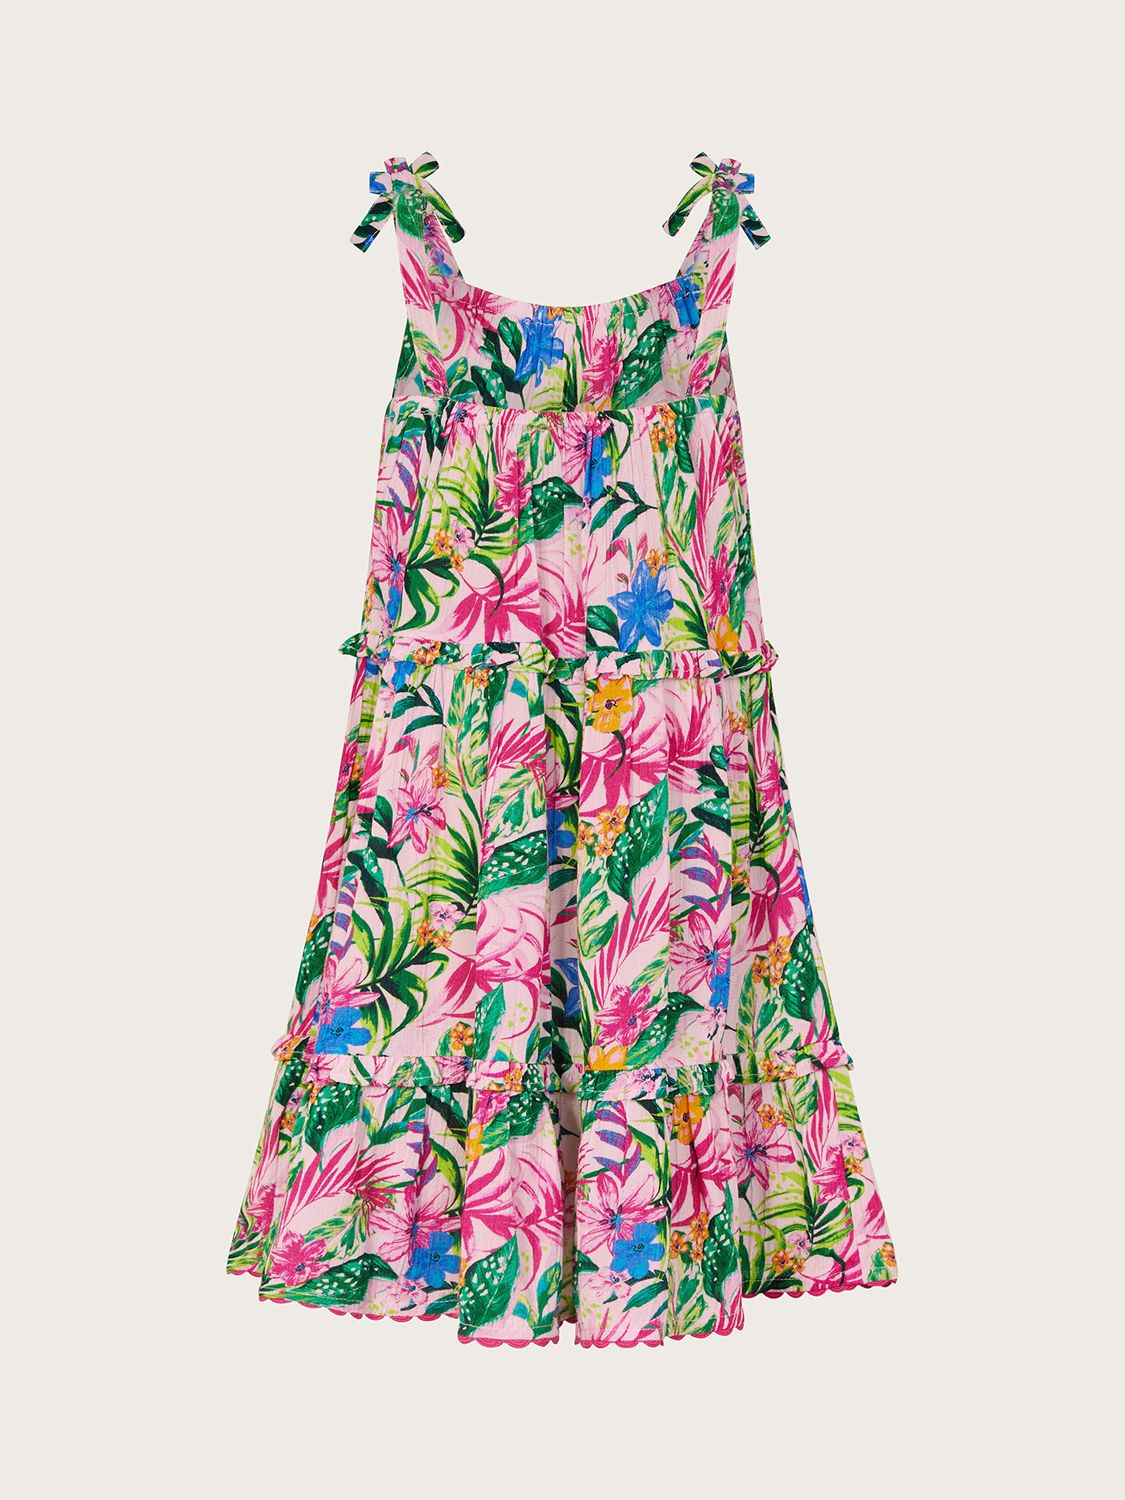 Monsoon Kids' Tropical Palm Tree Print Frill Tiered Dress, Multi, 3-4 years